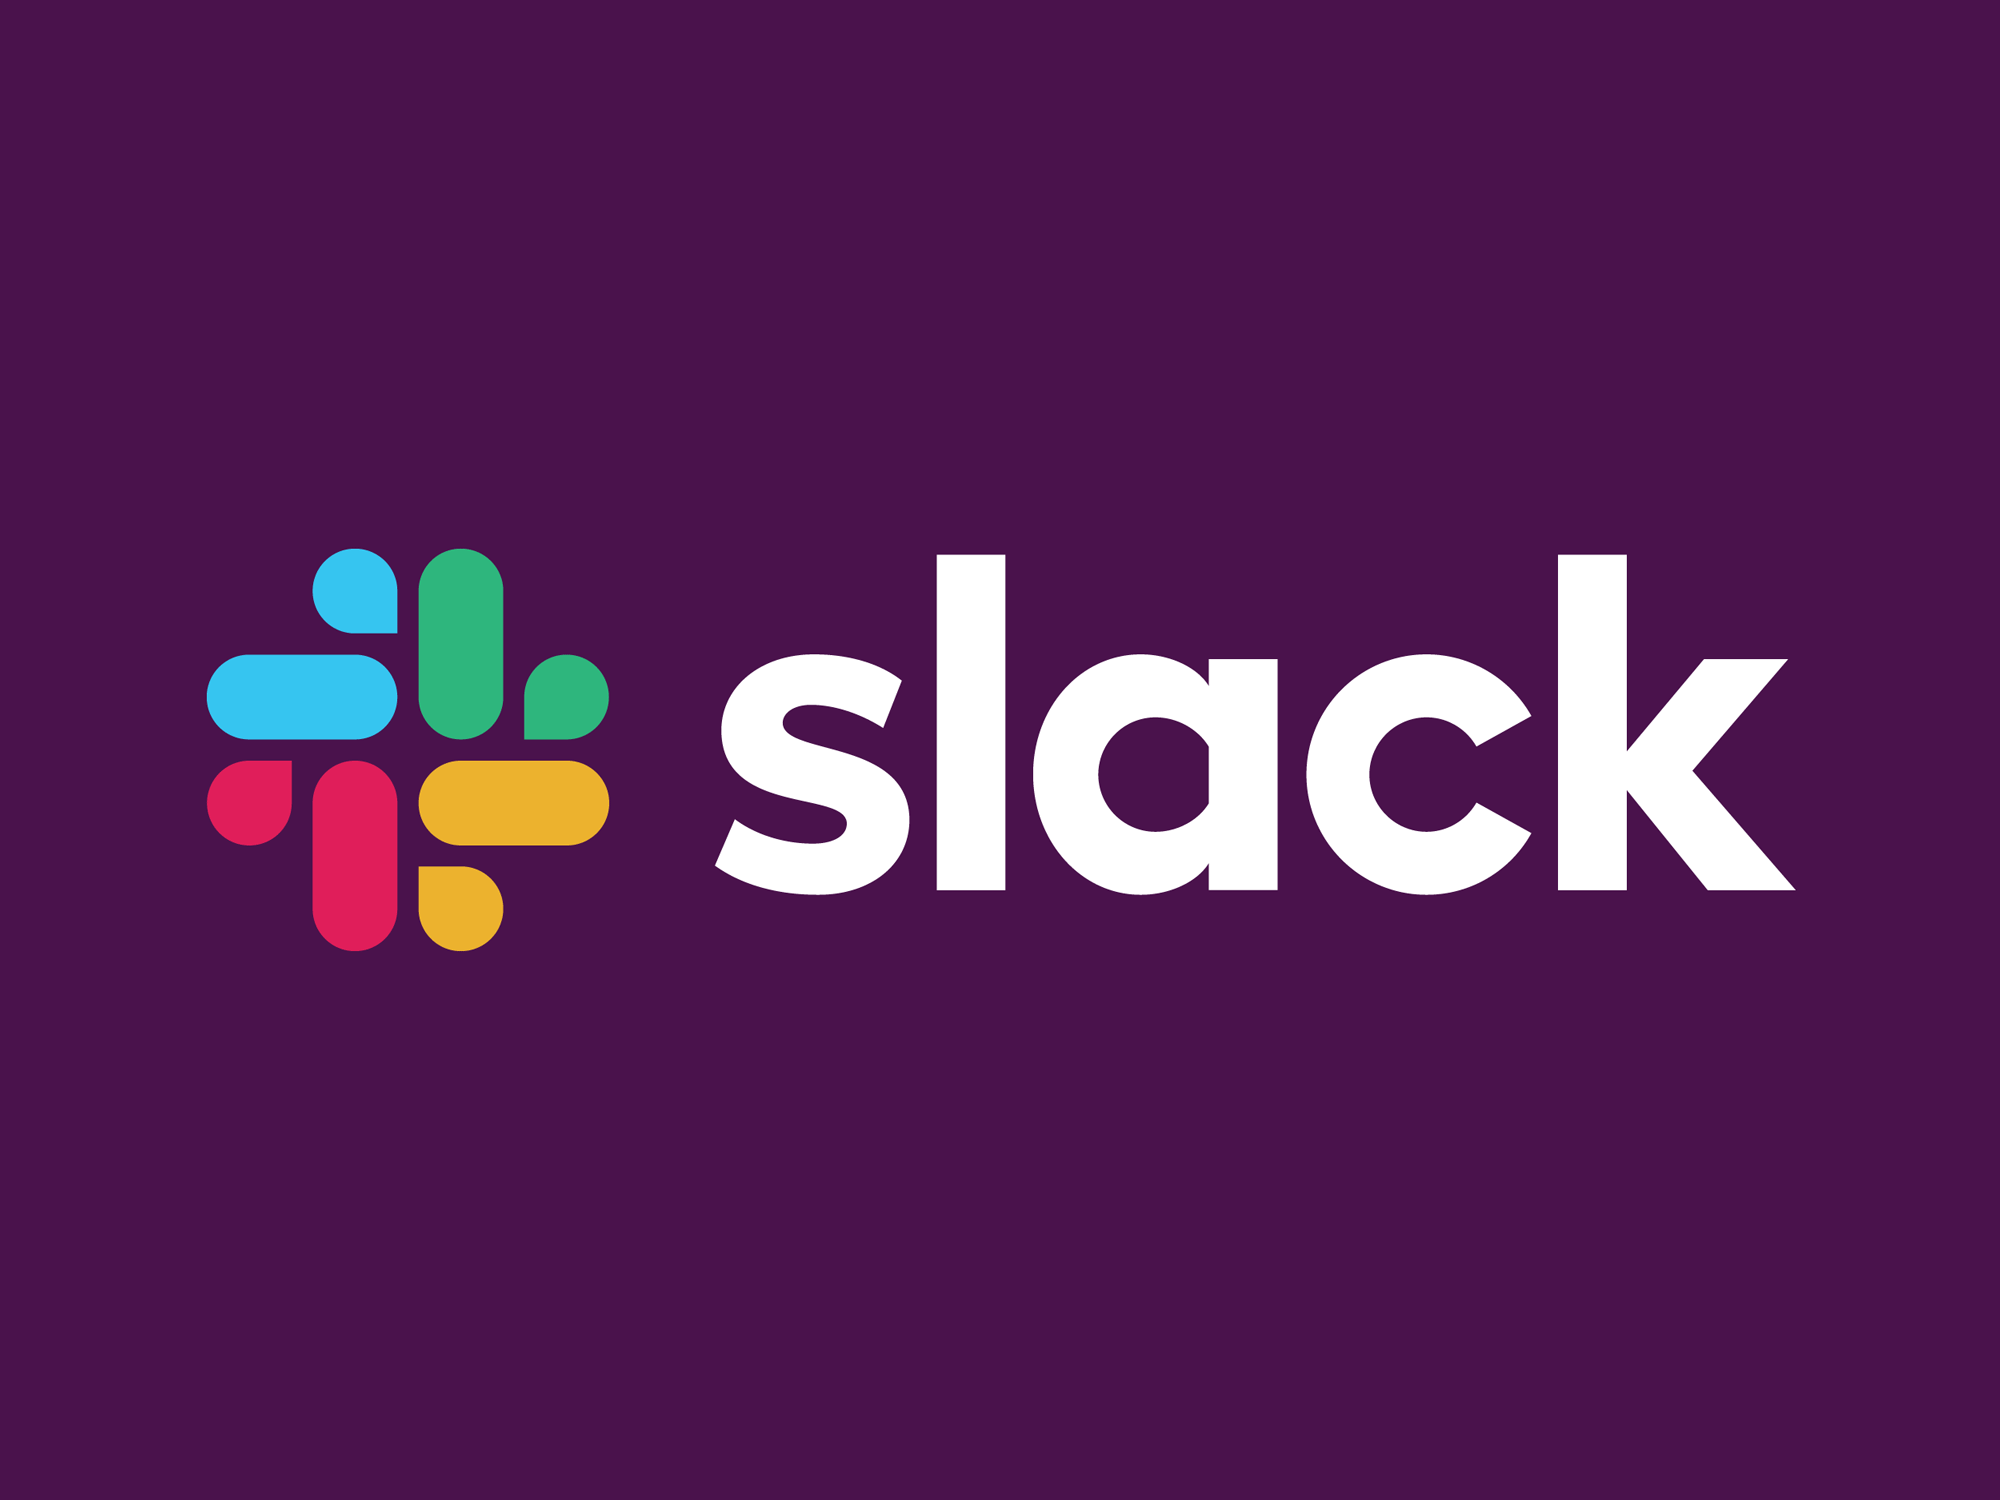 Slack logo on a dark background